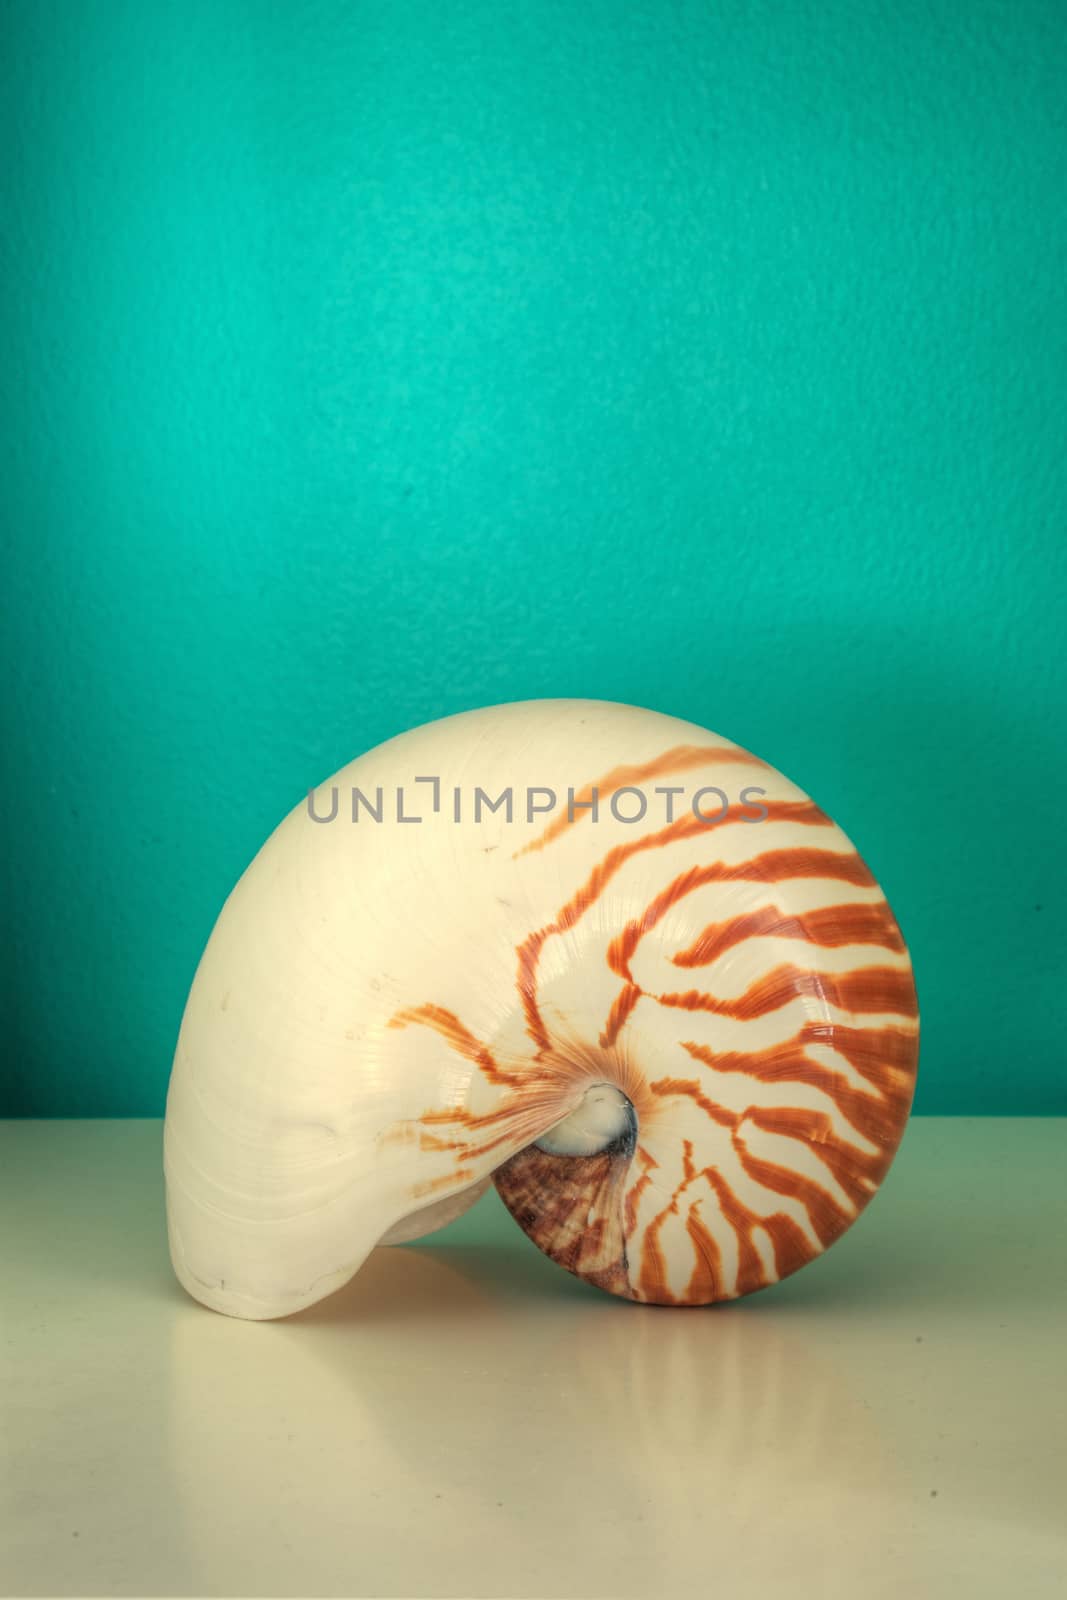 Nautilus, Nautilus pompilius, shell against an aqua blue green background in a decorative shelf.